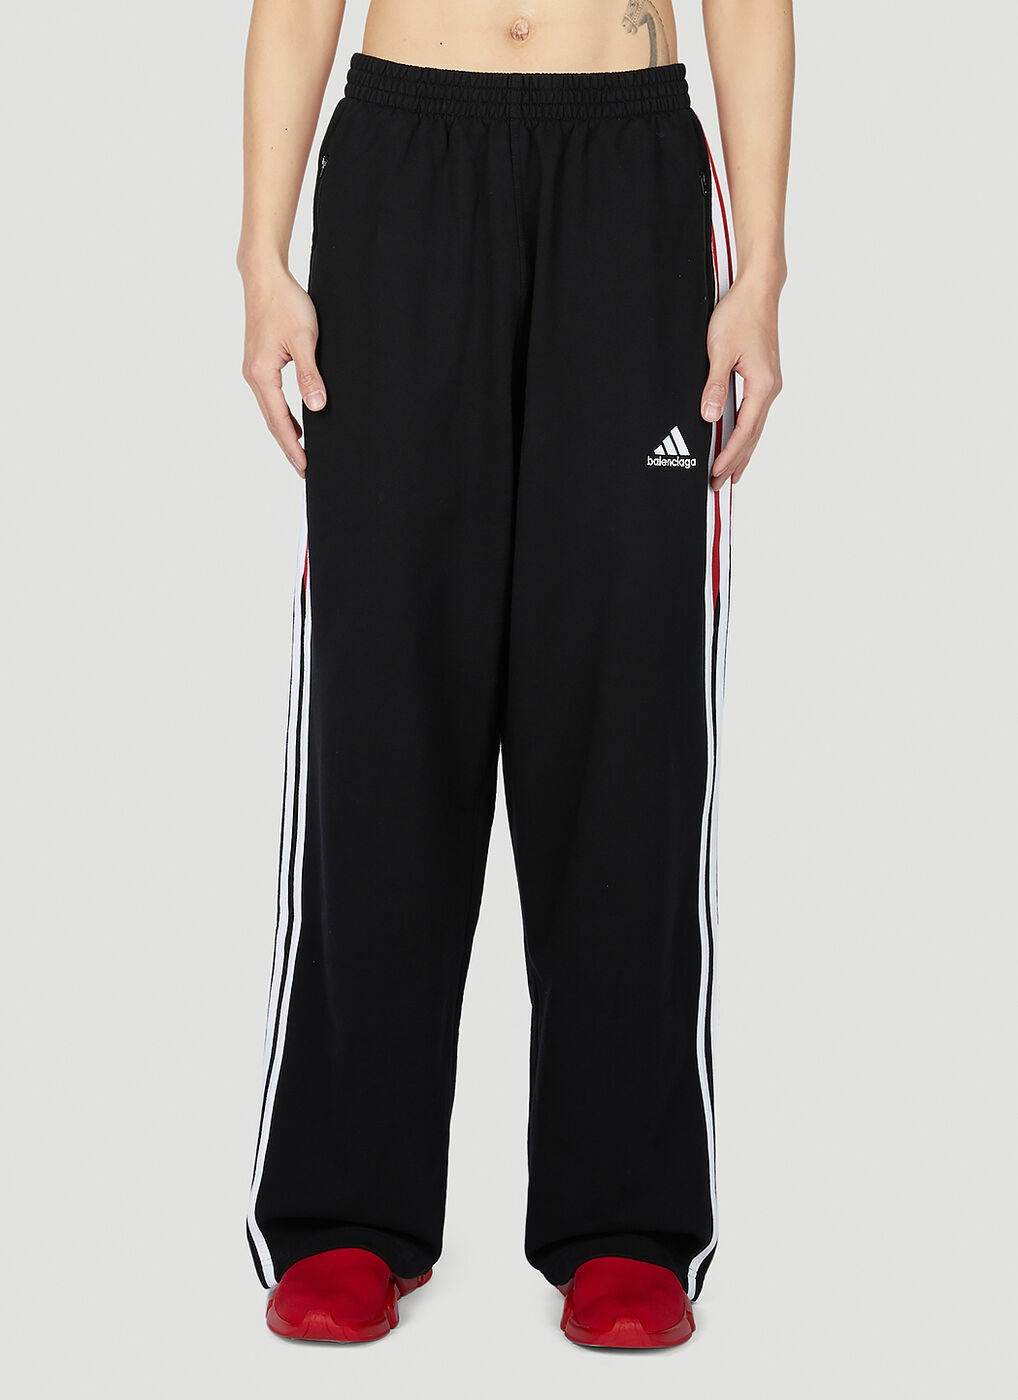 Balenciaga x adidas 3-Stripes cycling shorts - Black